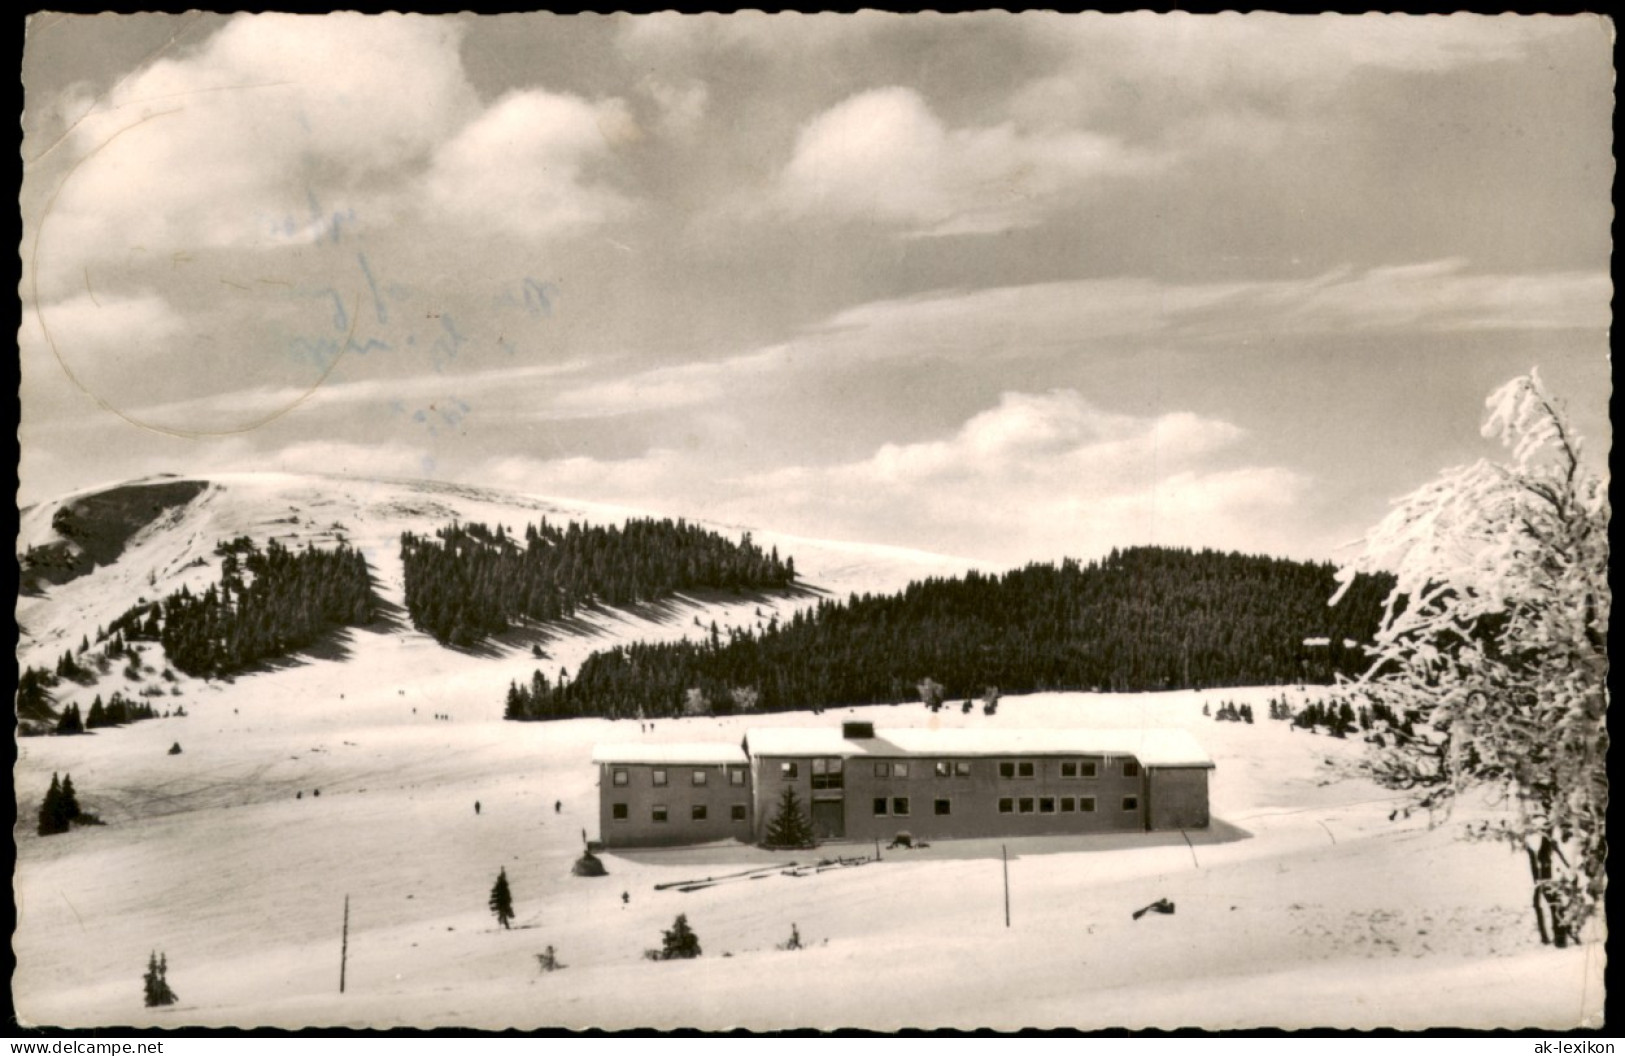 Feldberg (Schwarzwald) Gasthaus Herzogenhorn (1417 M ü. M.) Im Winter 1962 - Feldberg